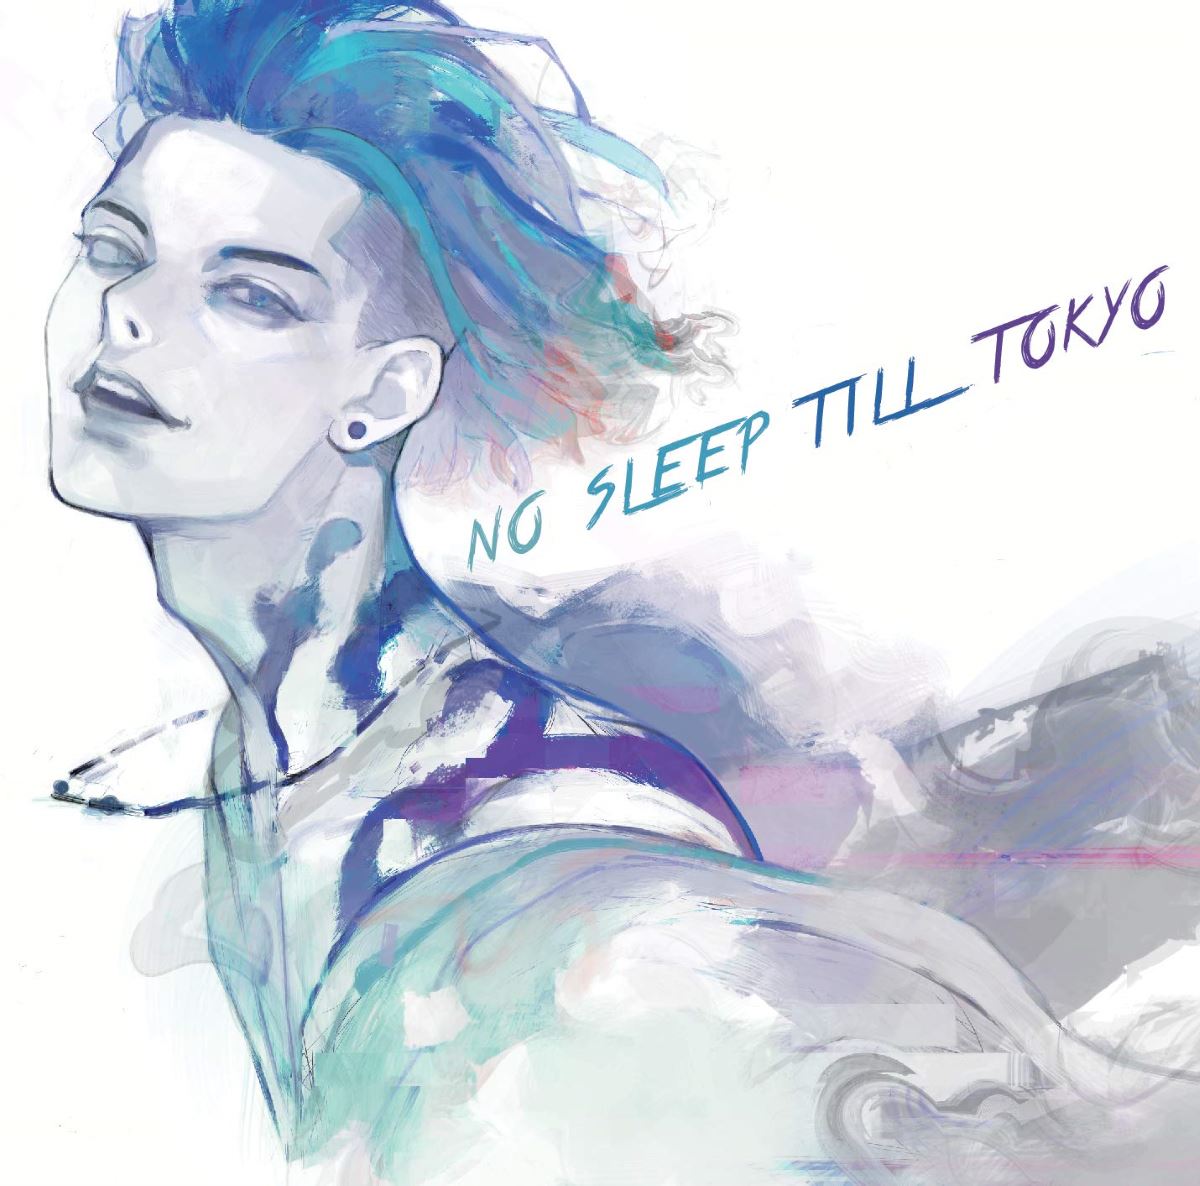 Cover art for『DAOKO × MIYAVI - 千客万来』from the release『NO SLEEP TILL TOKYO